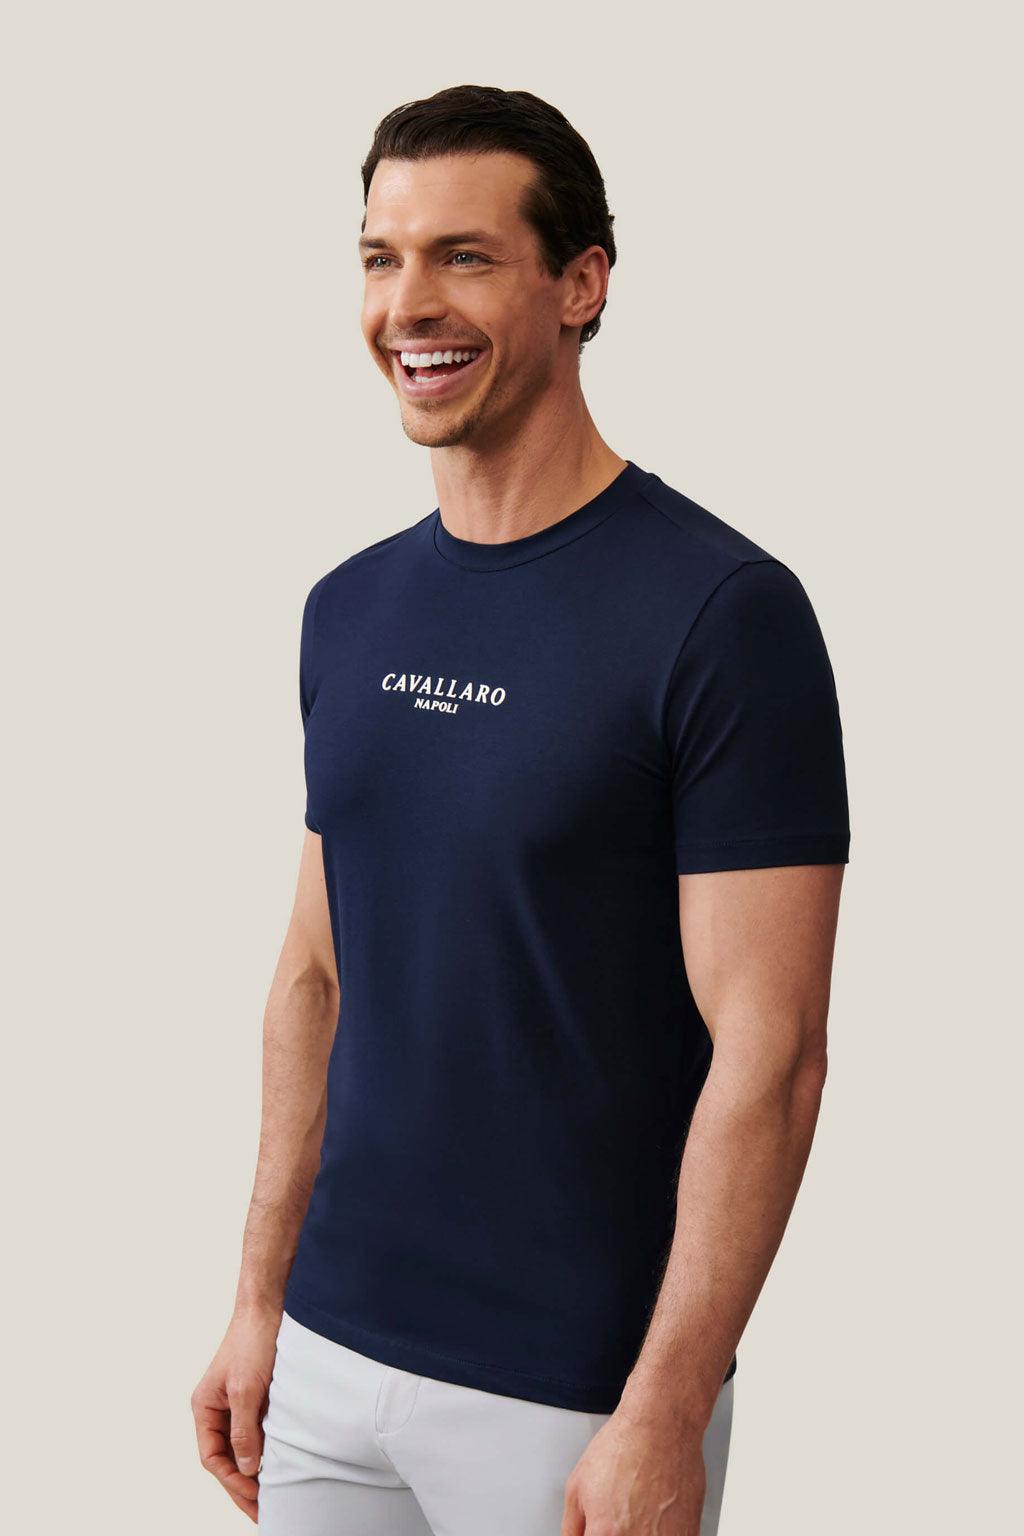 Cavallaro t-shirt